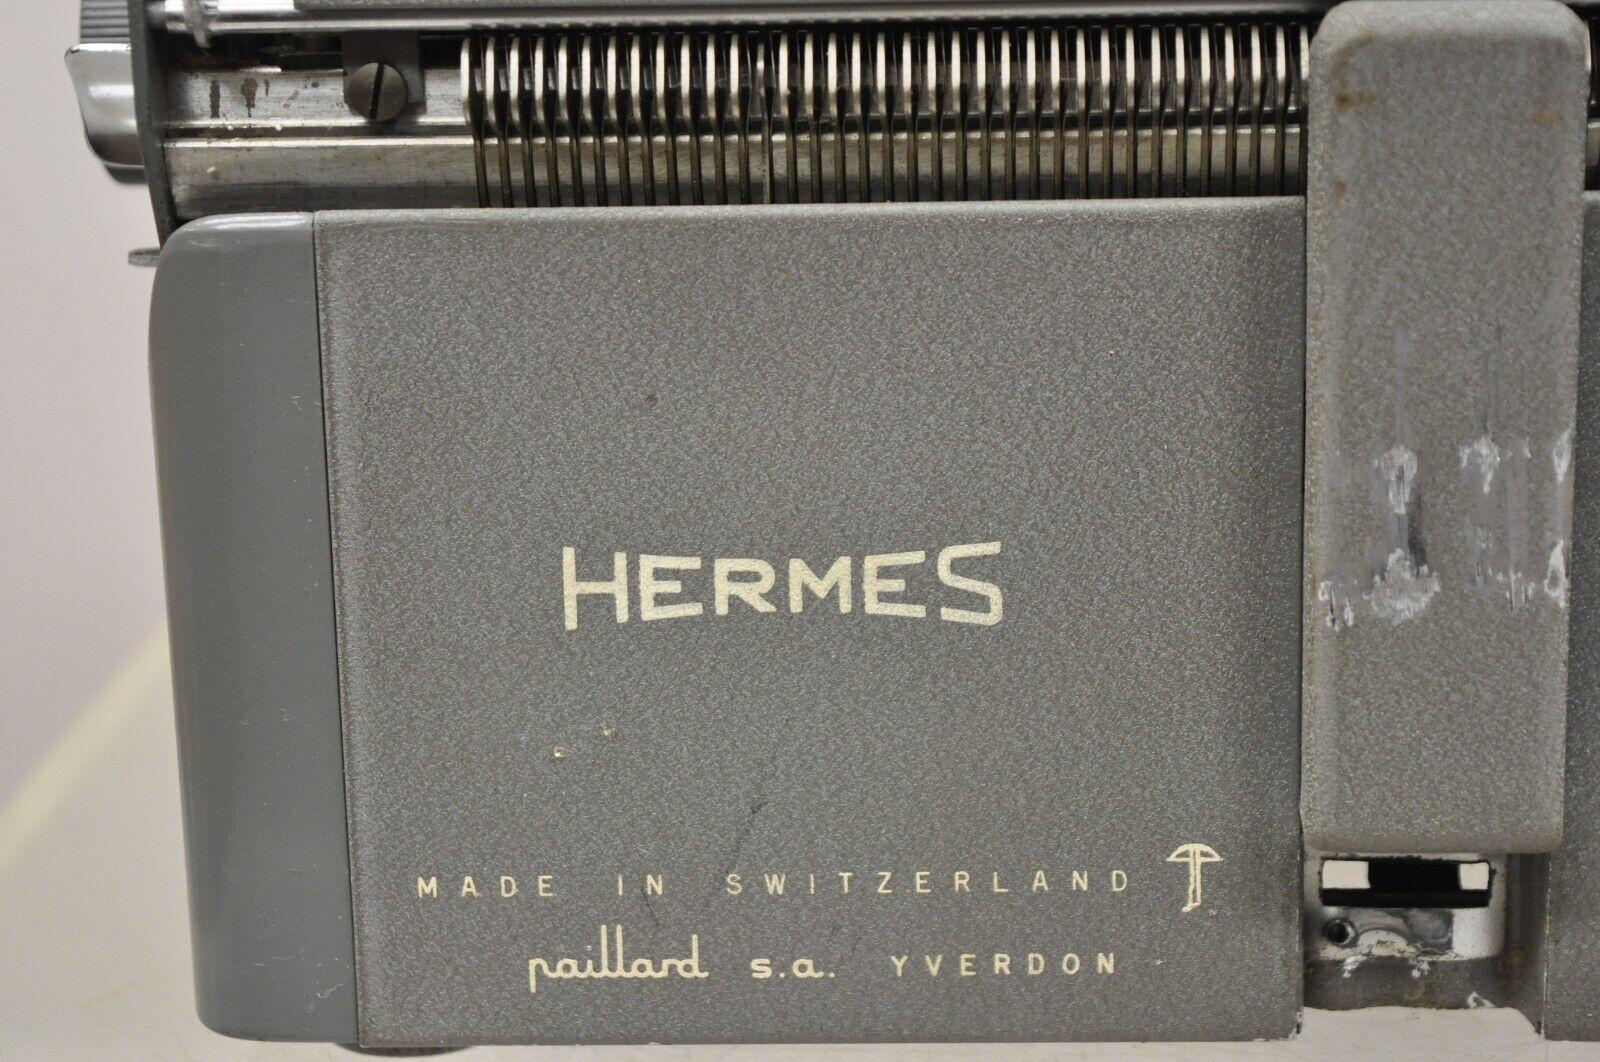 Vintage Hermes 2000 by Paillard Manual Typewriter with Green Carrying Case 5